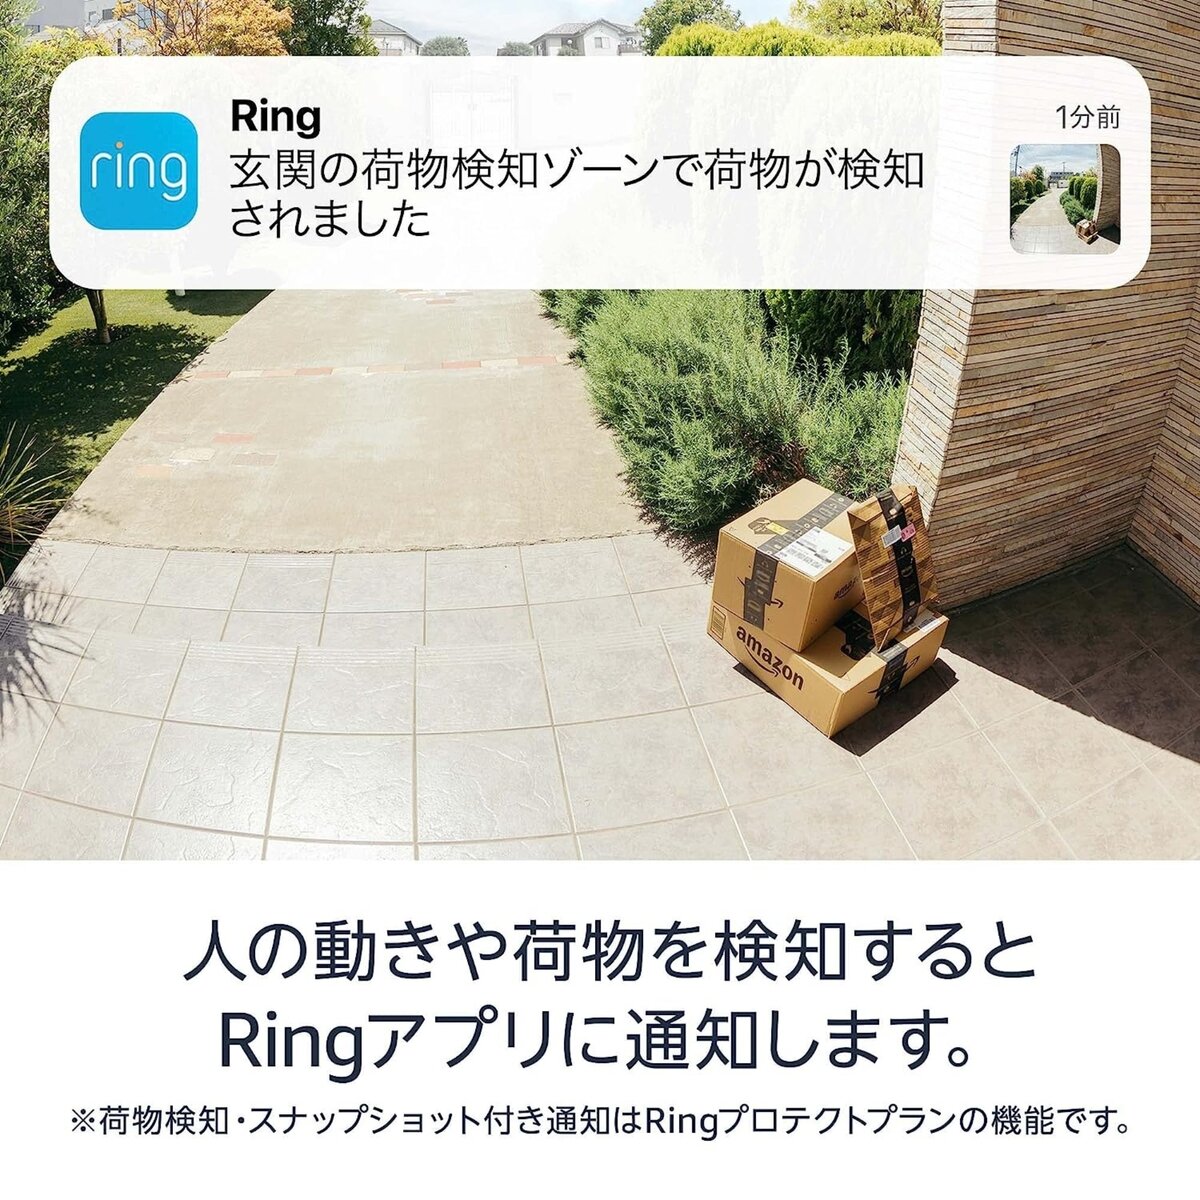 Ring ビデオドアベル／インドアカメラセット RCA004